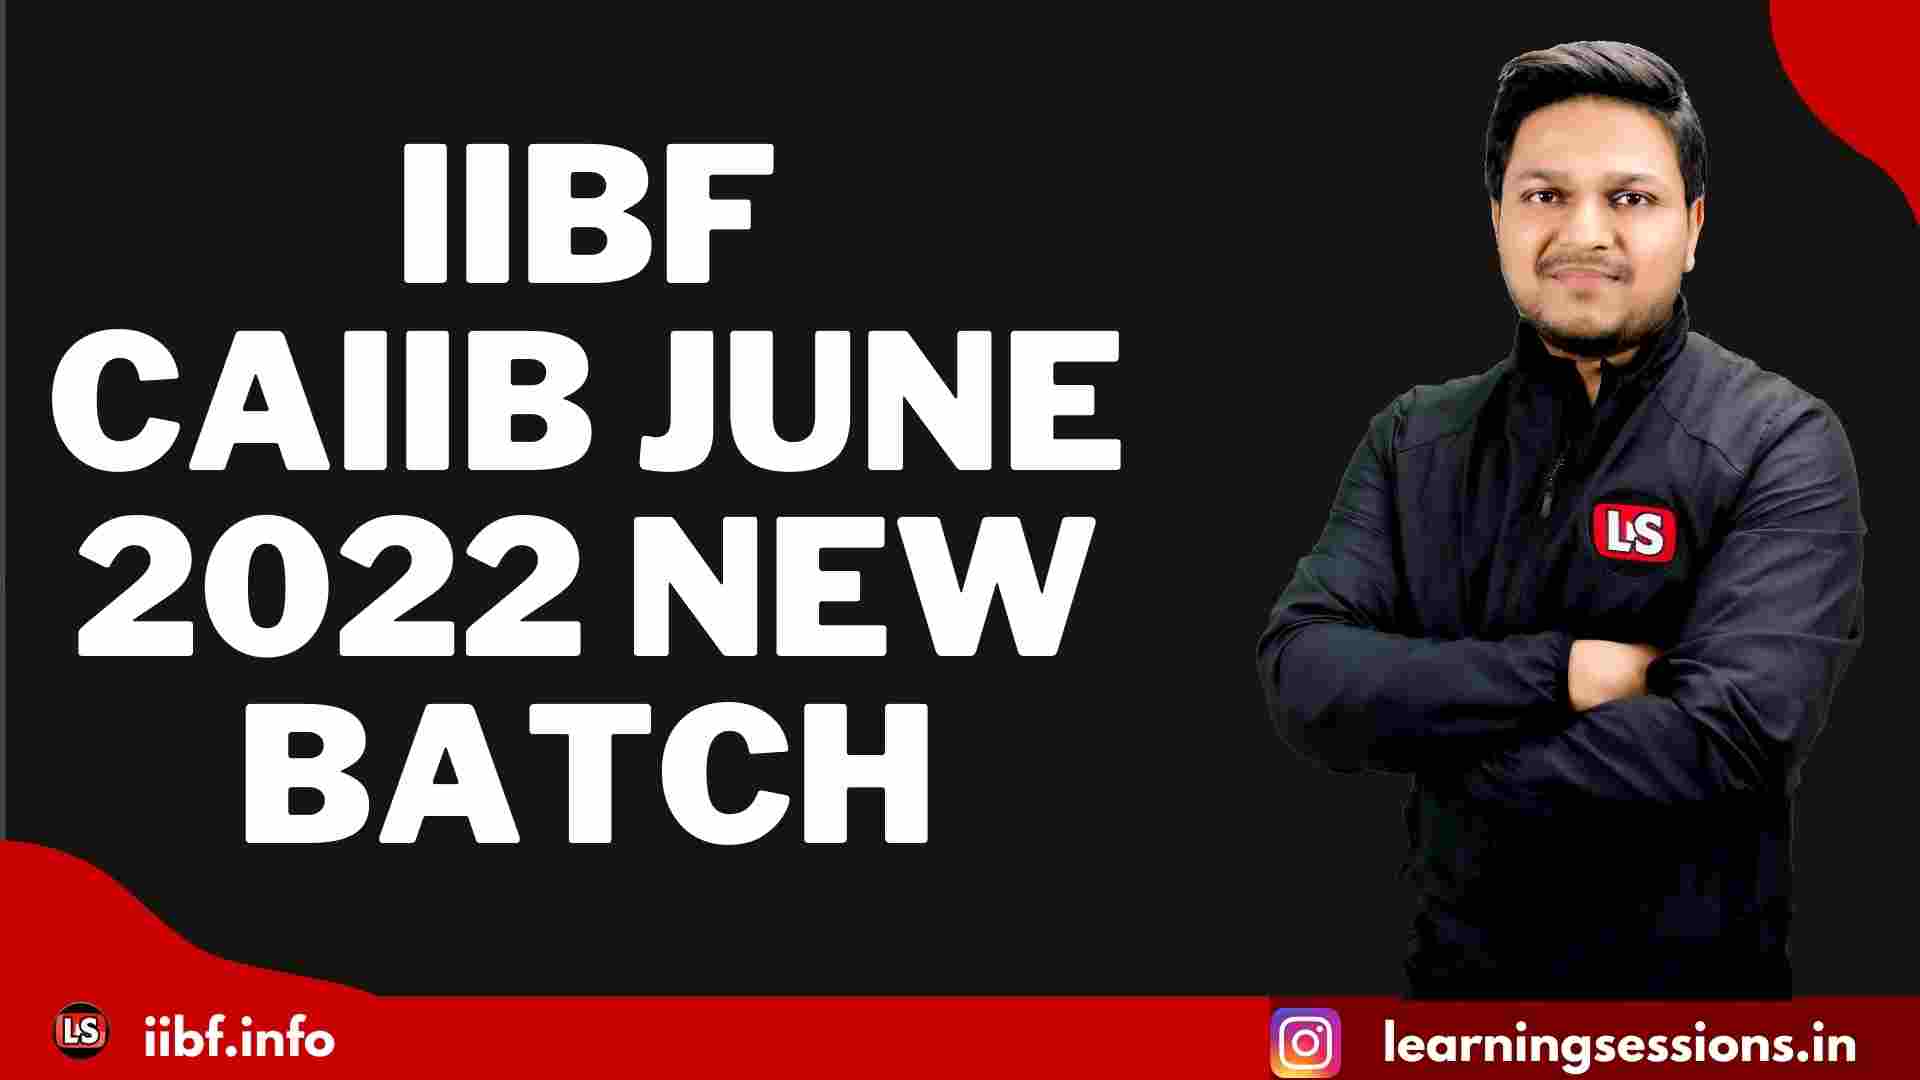 IIBF CAIIB JUNE 2022 NEW BATCH | SYLLABUS & STUDY MATERIAL 